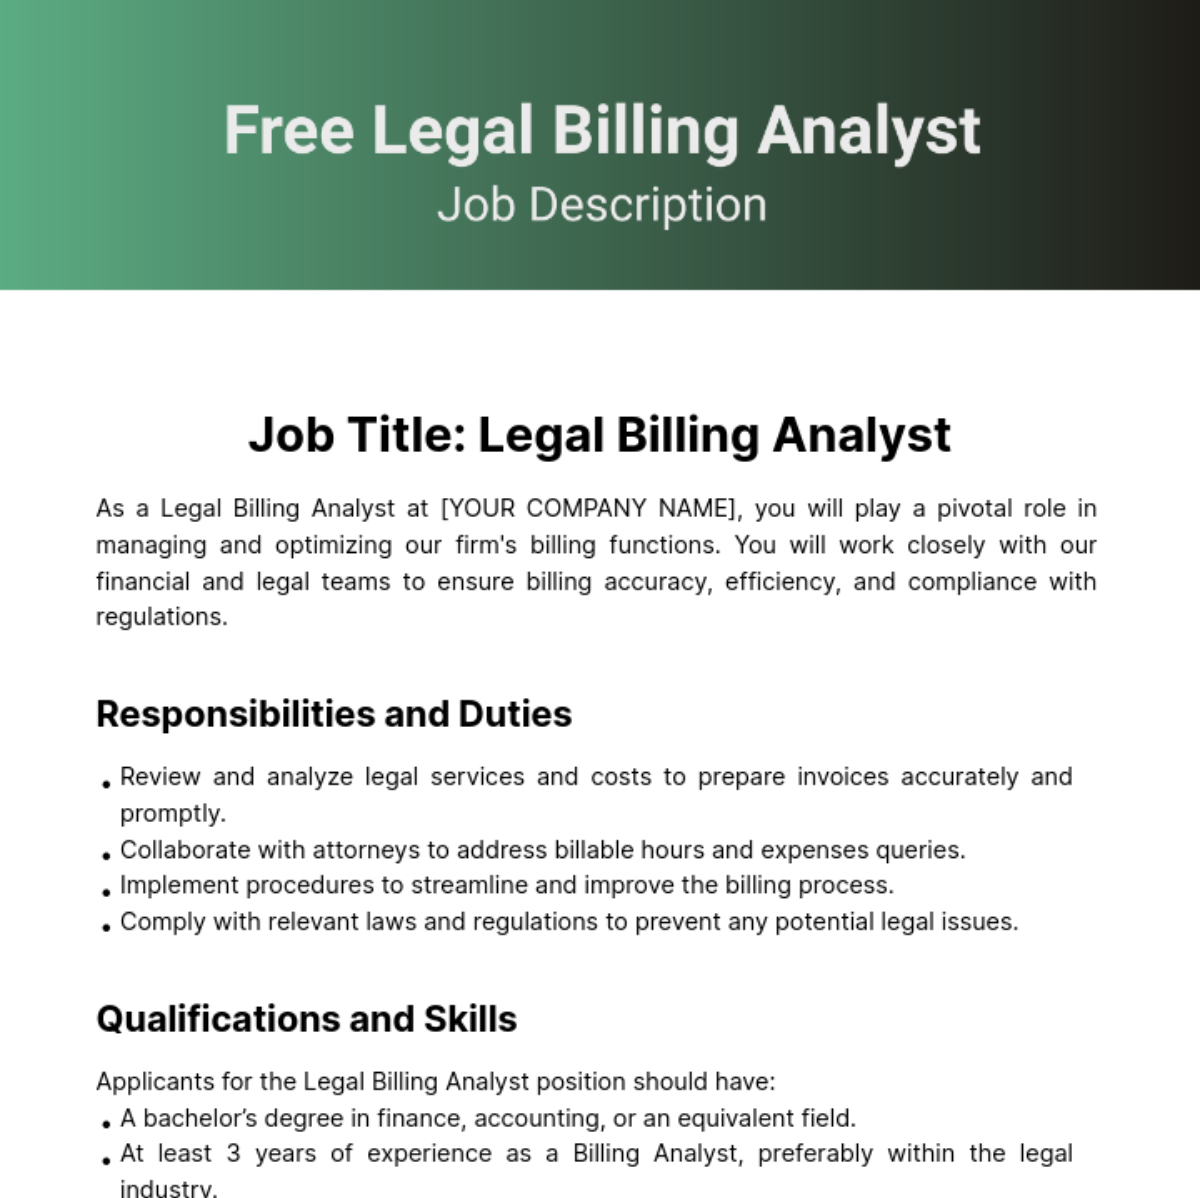 Free Legal Billing Analyst Job Description Template